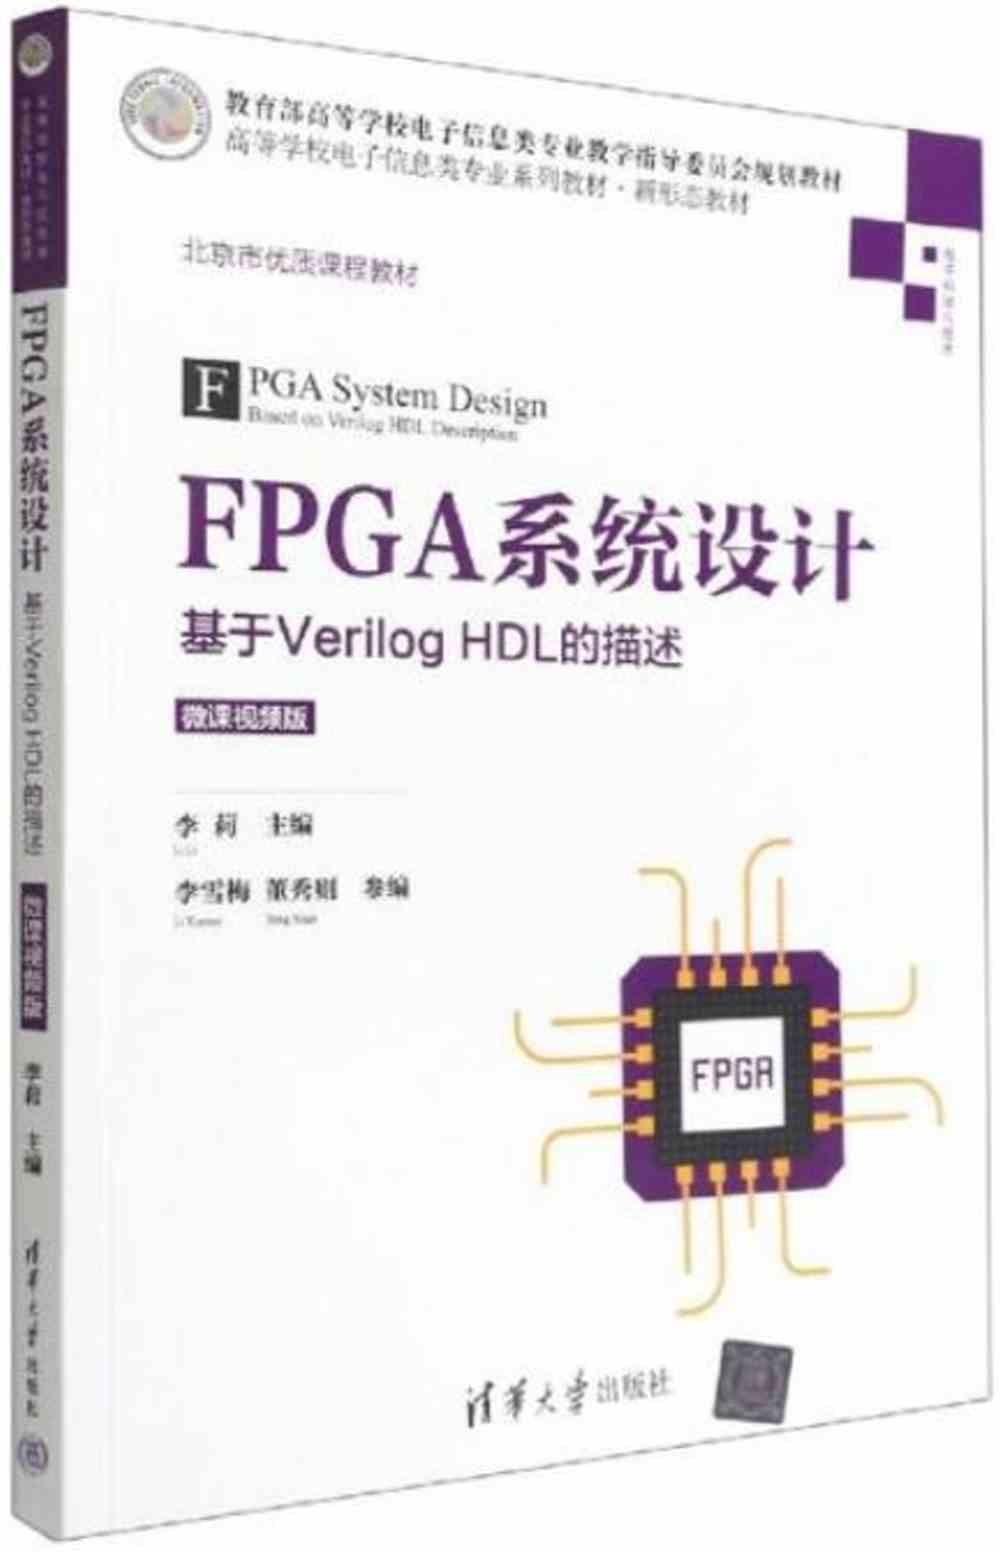 FPGA系統設計：基於Verilog HDL的描述（微課視頻版）